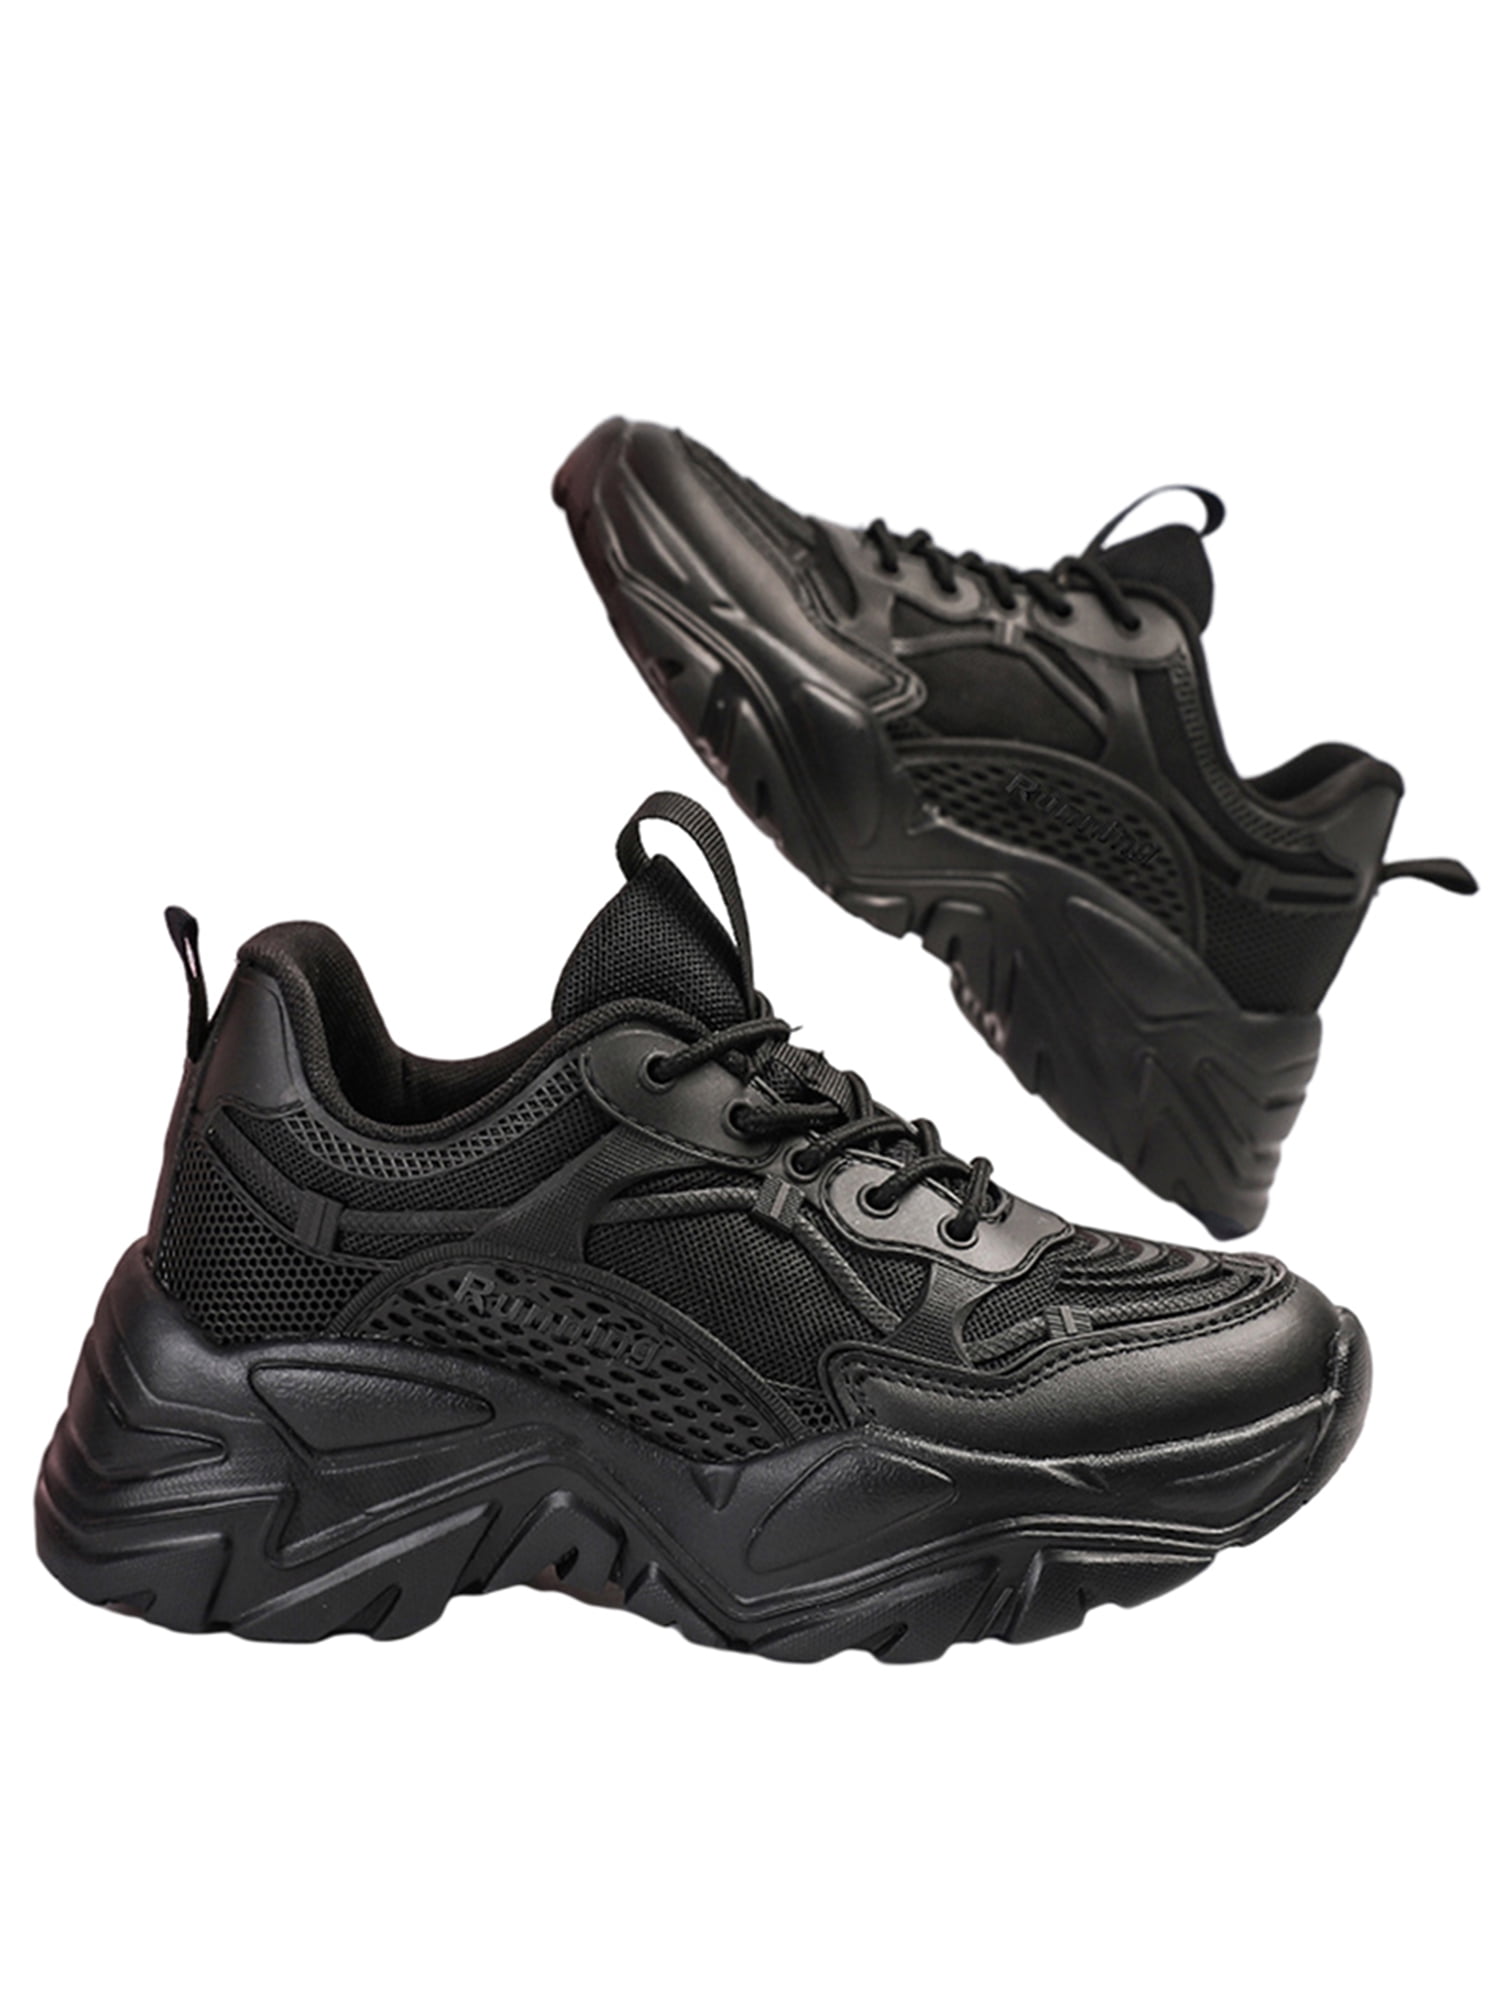 Men Black Lace Orthopedic Diabetic Shock Retro Light Cross Trainer Shoe Size 